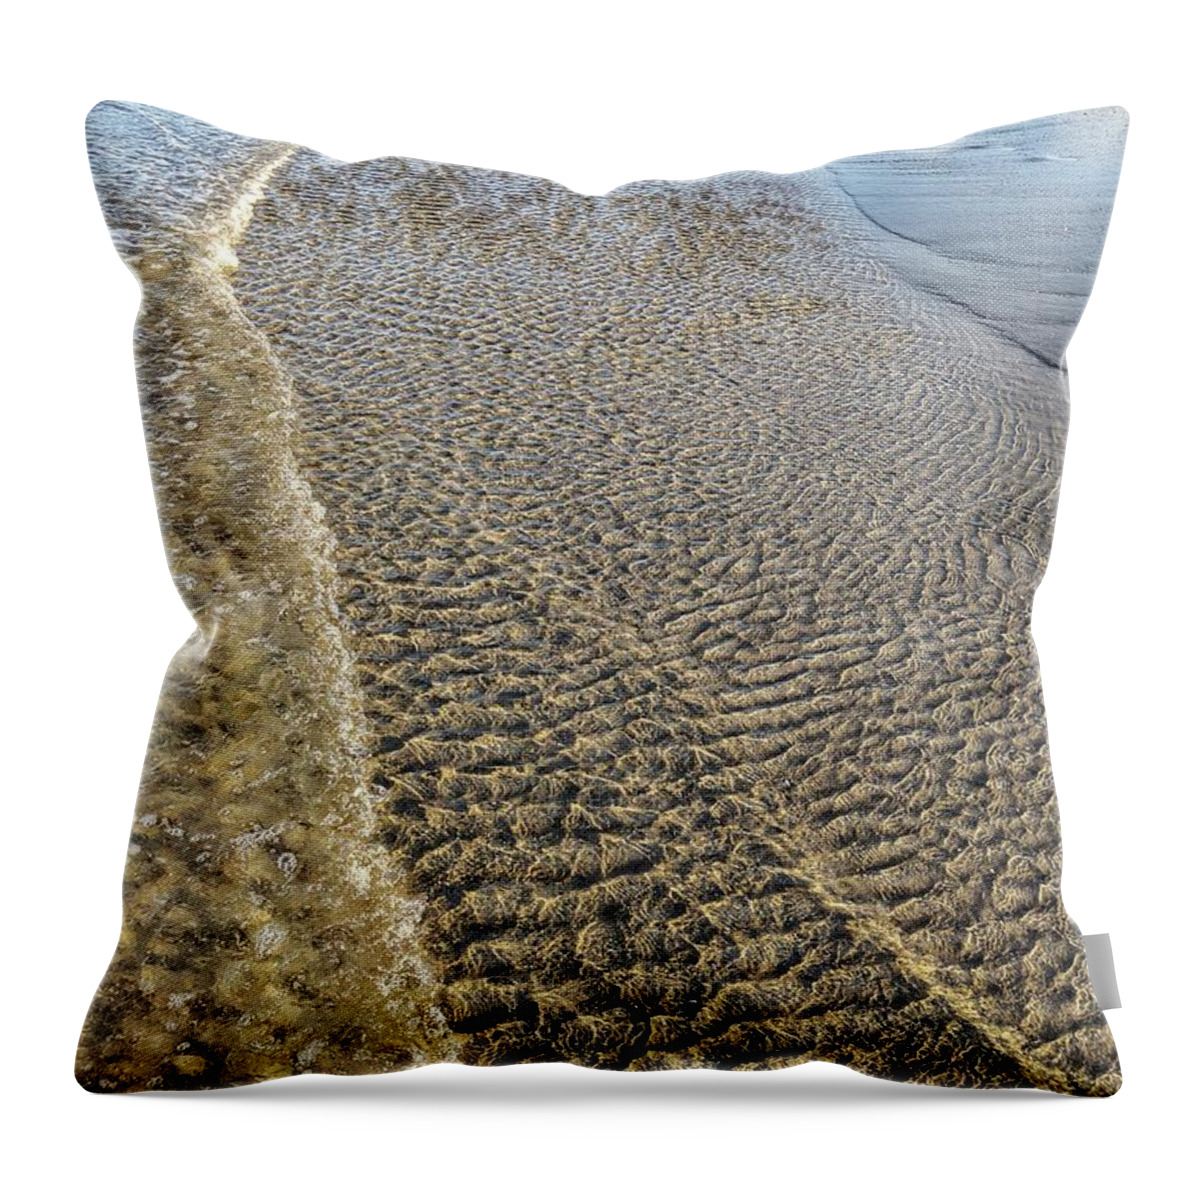 Ocean Throw Pillow featuring the photograph Ripple Effect by Portia Olaughlin